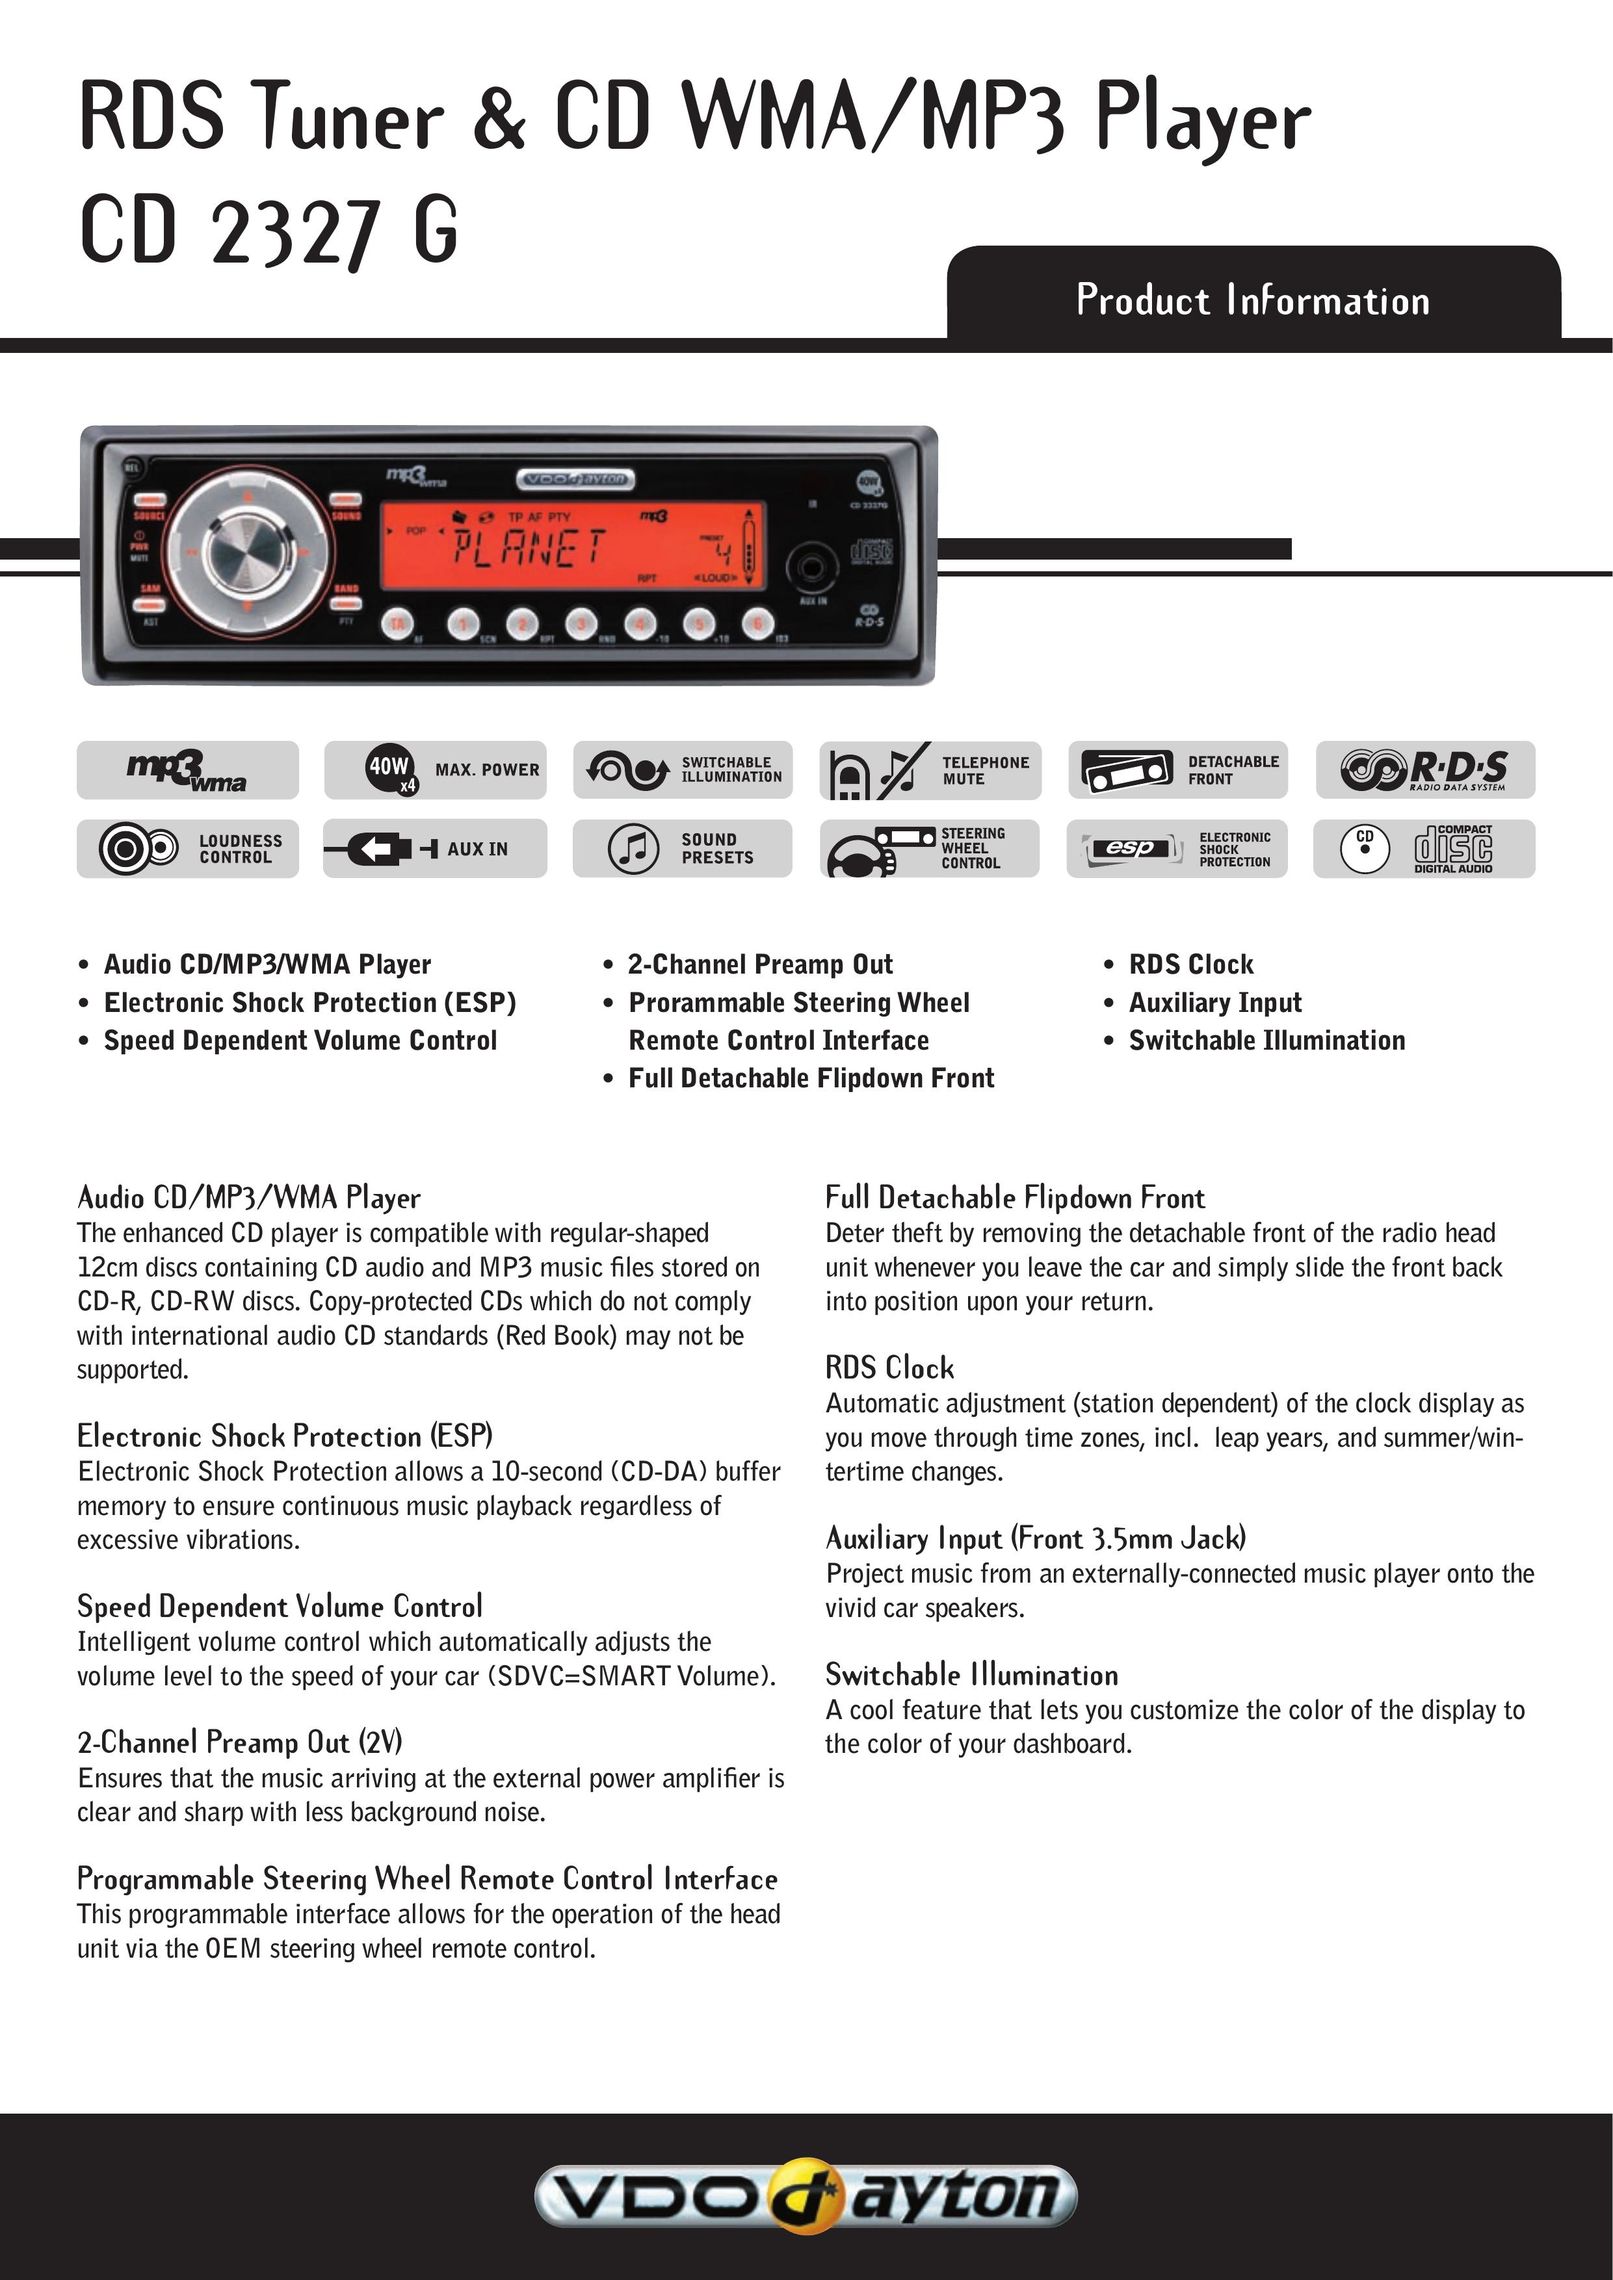 VDO Dayton CD 2327 G Car Stereo System User Manual